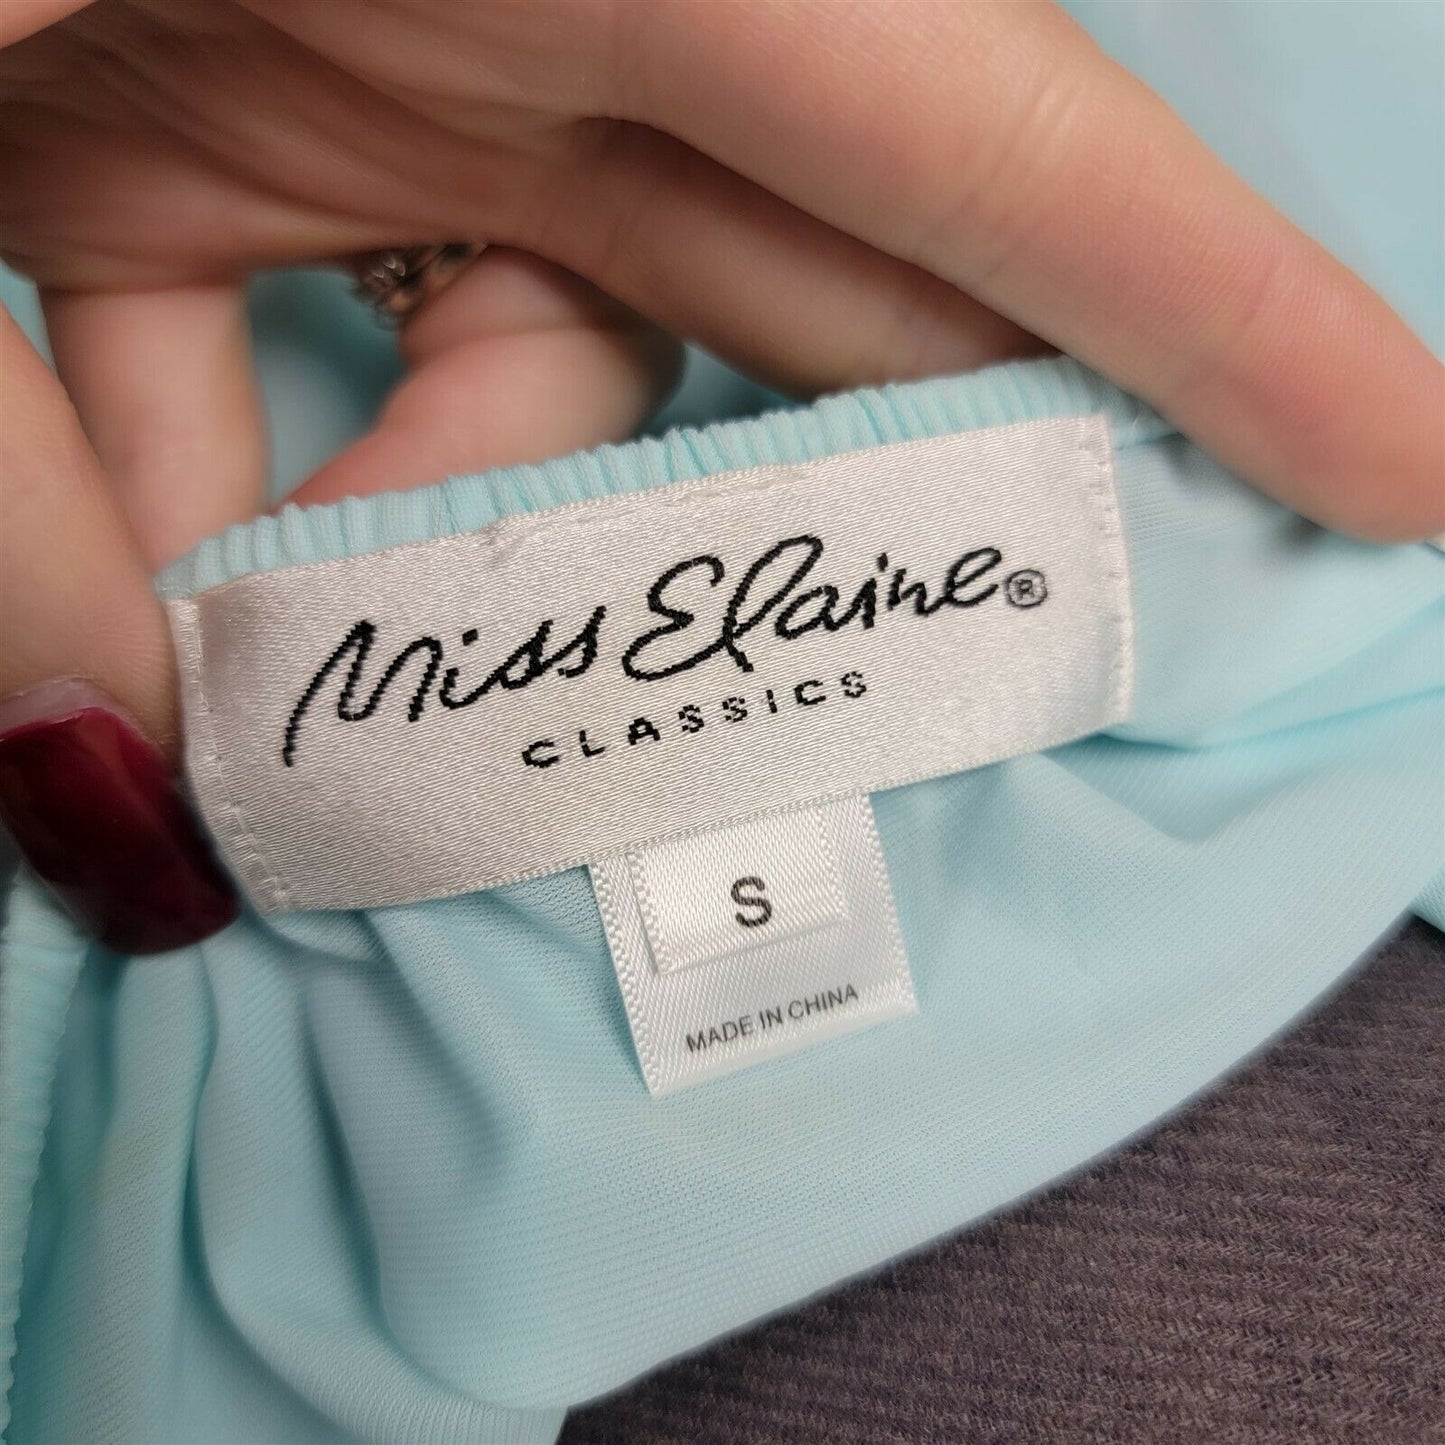 Miss Elaine Vintage Nylon Nightgown Light Blue Sheer Womens Size S